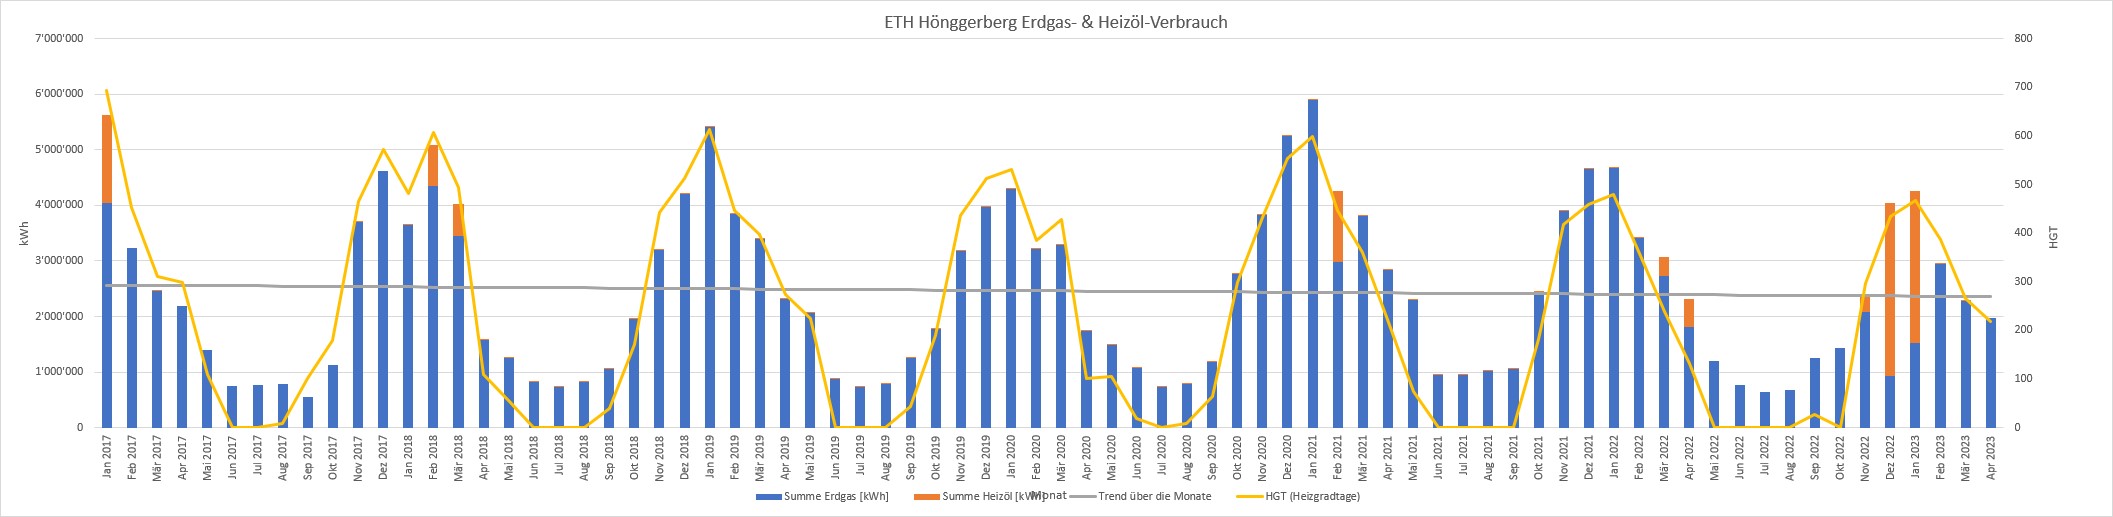 Vergrösserte Ansicht: Grafik zum Erdgas- & Heizöl-Verbrauch für den ETH Hönggerberg